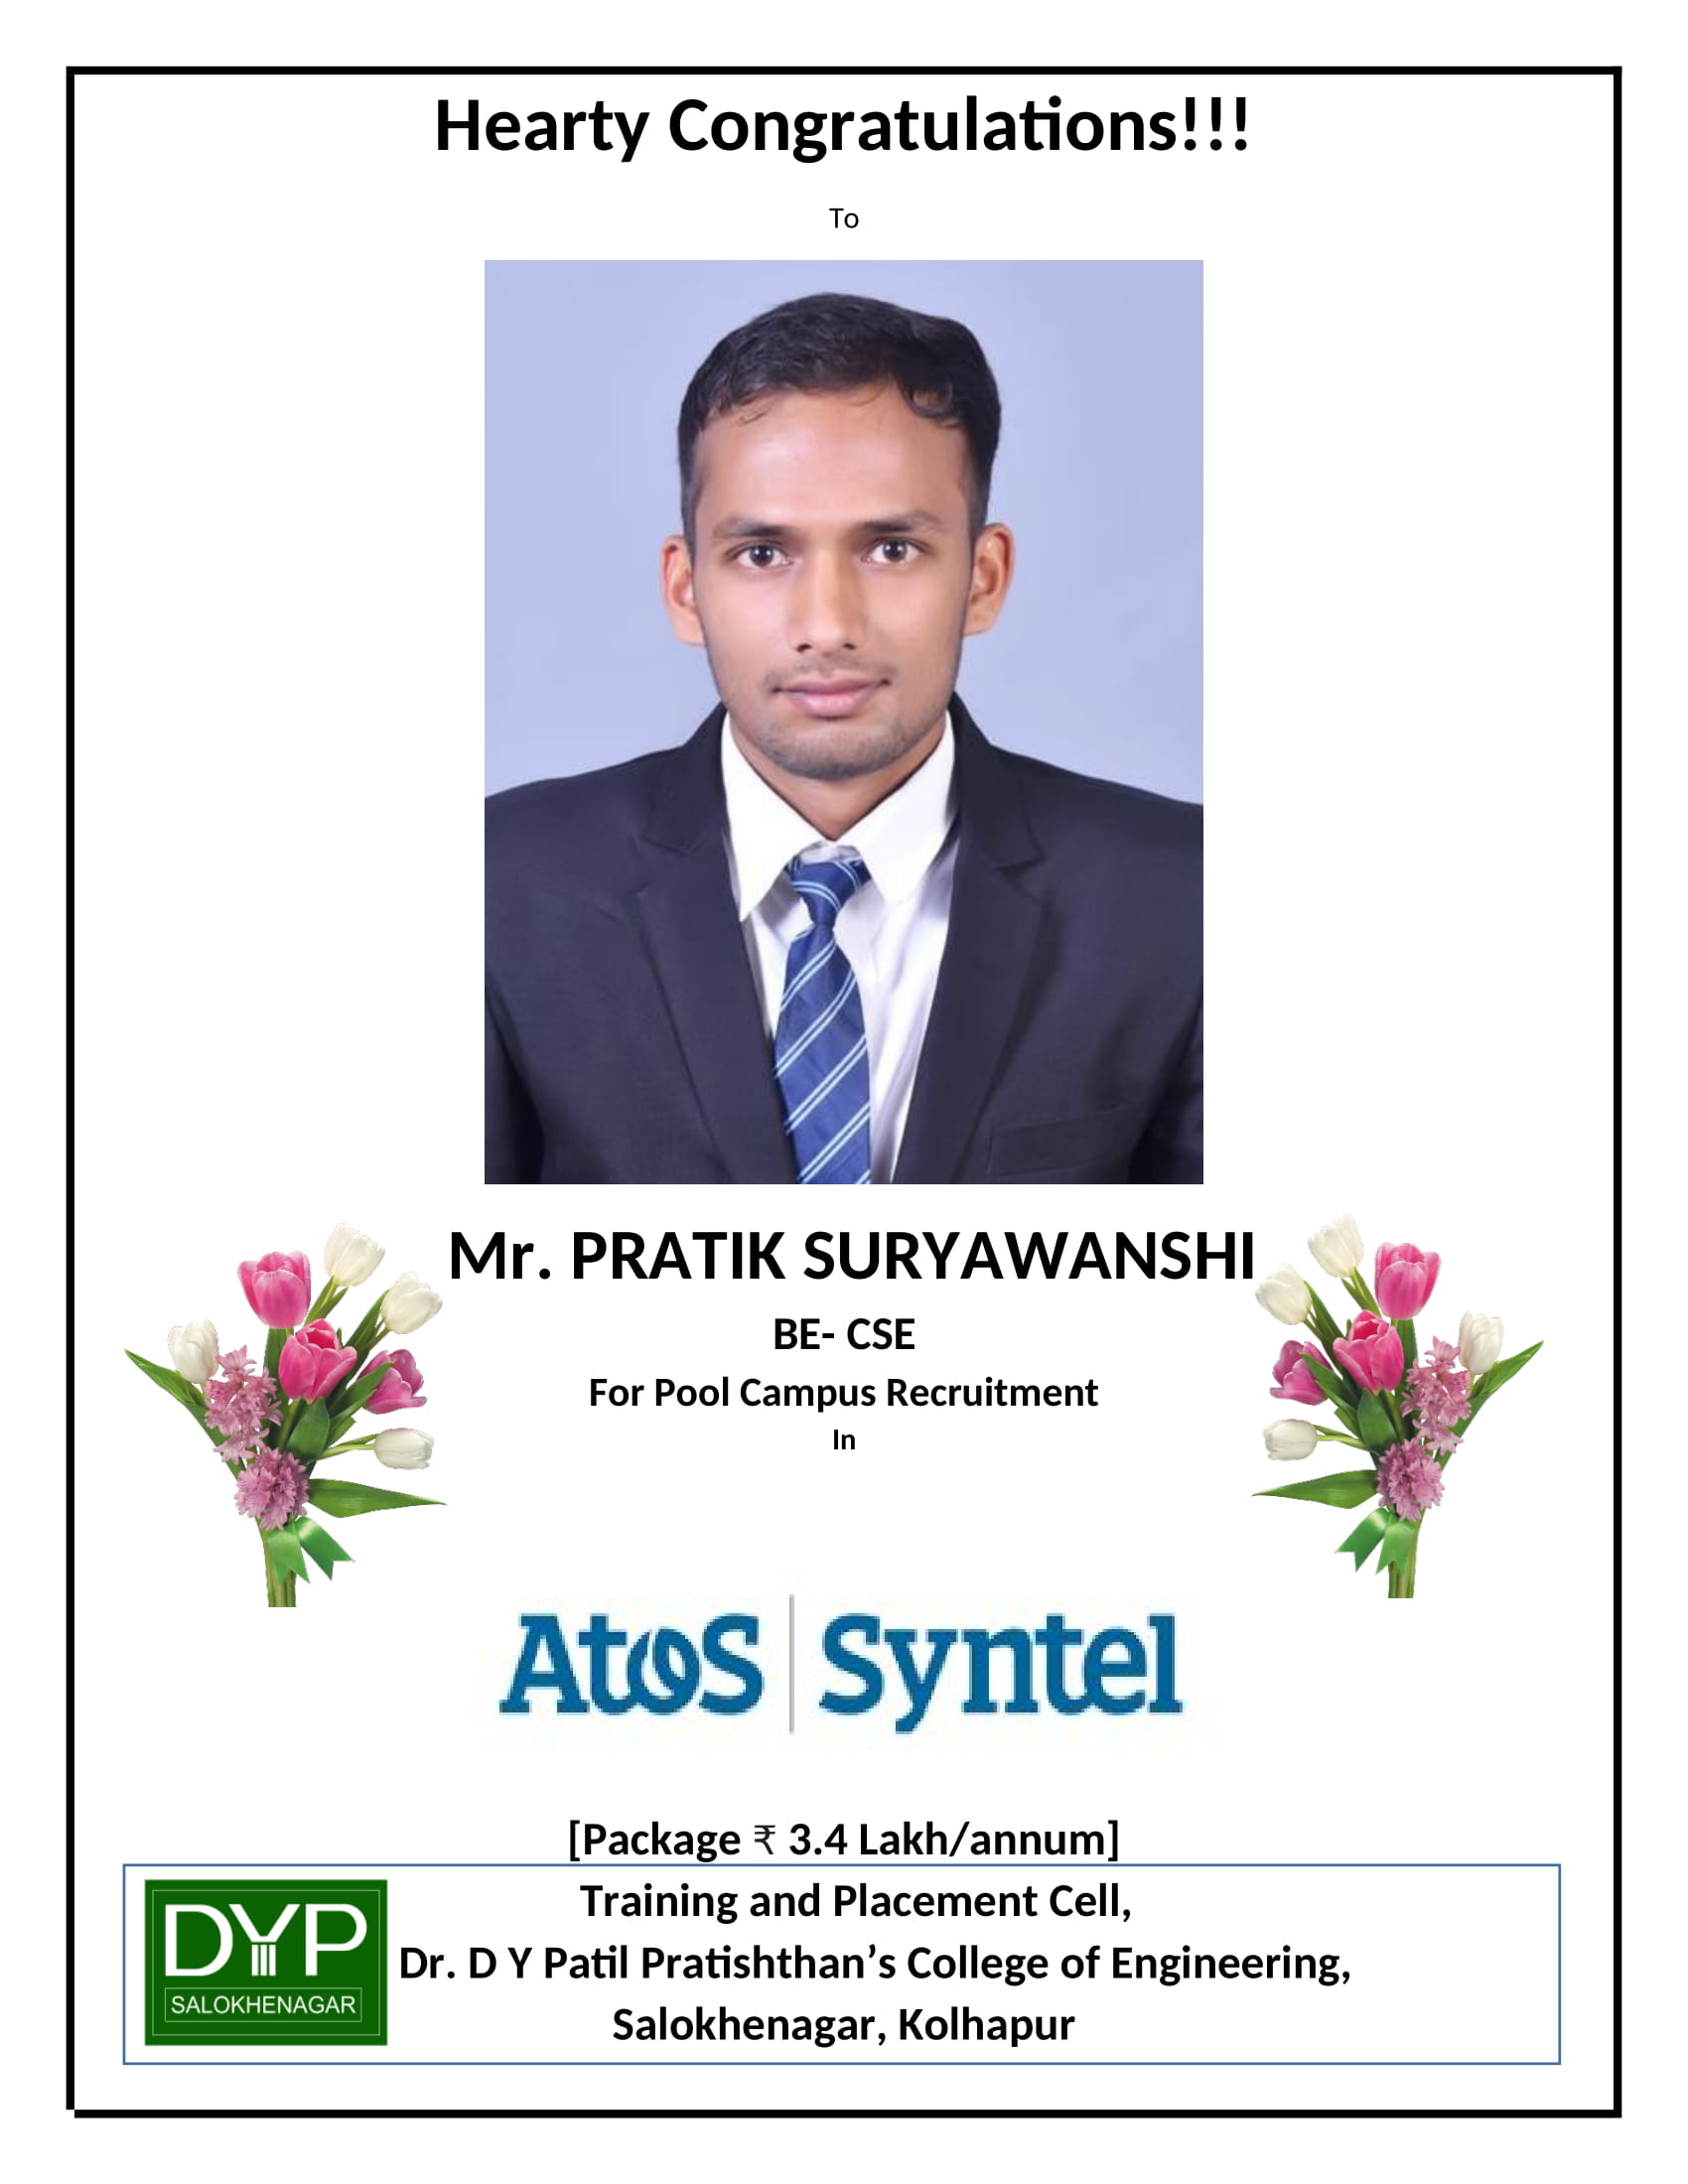 ATOS_SYNTEL_Prajwal-Pratik_Congrats-2